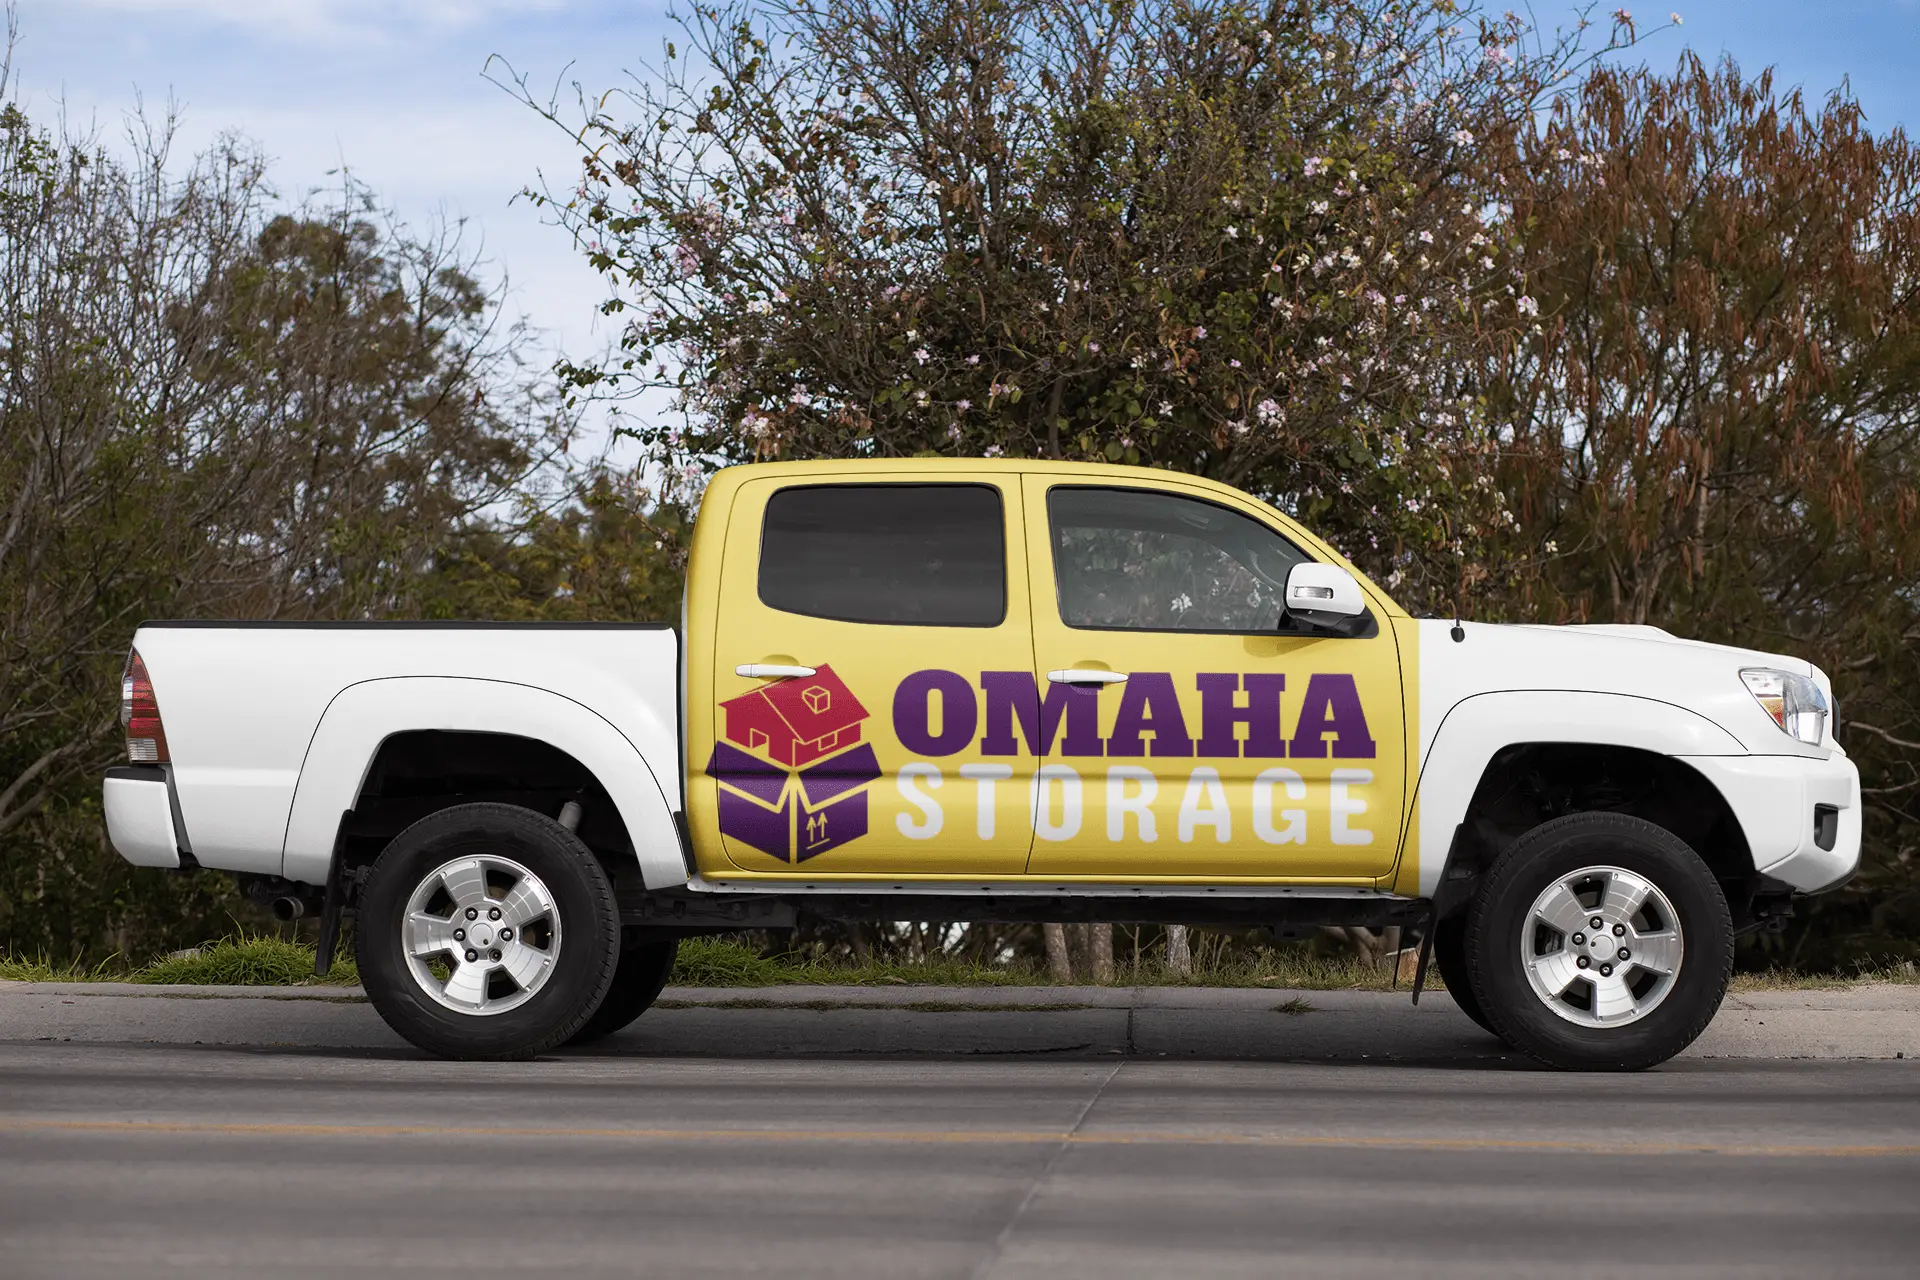 Omaha storage pickup